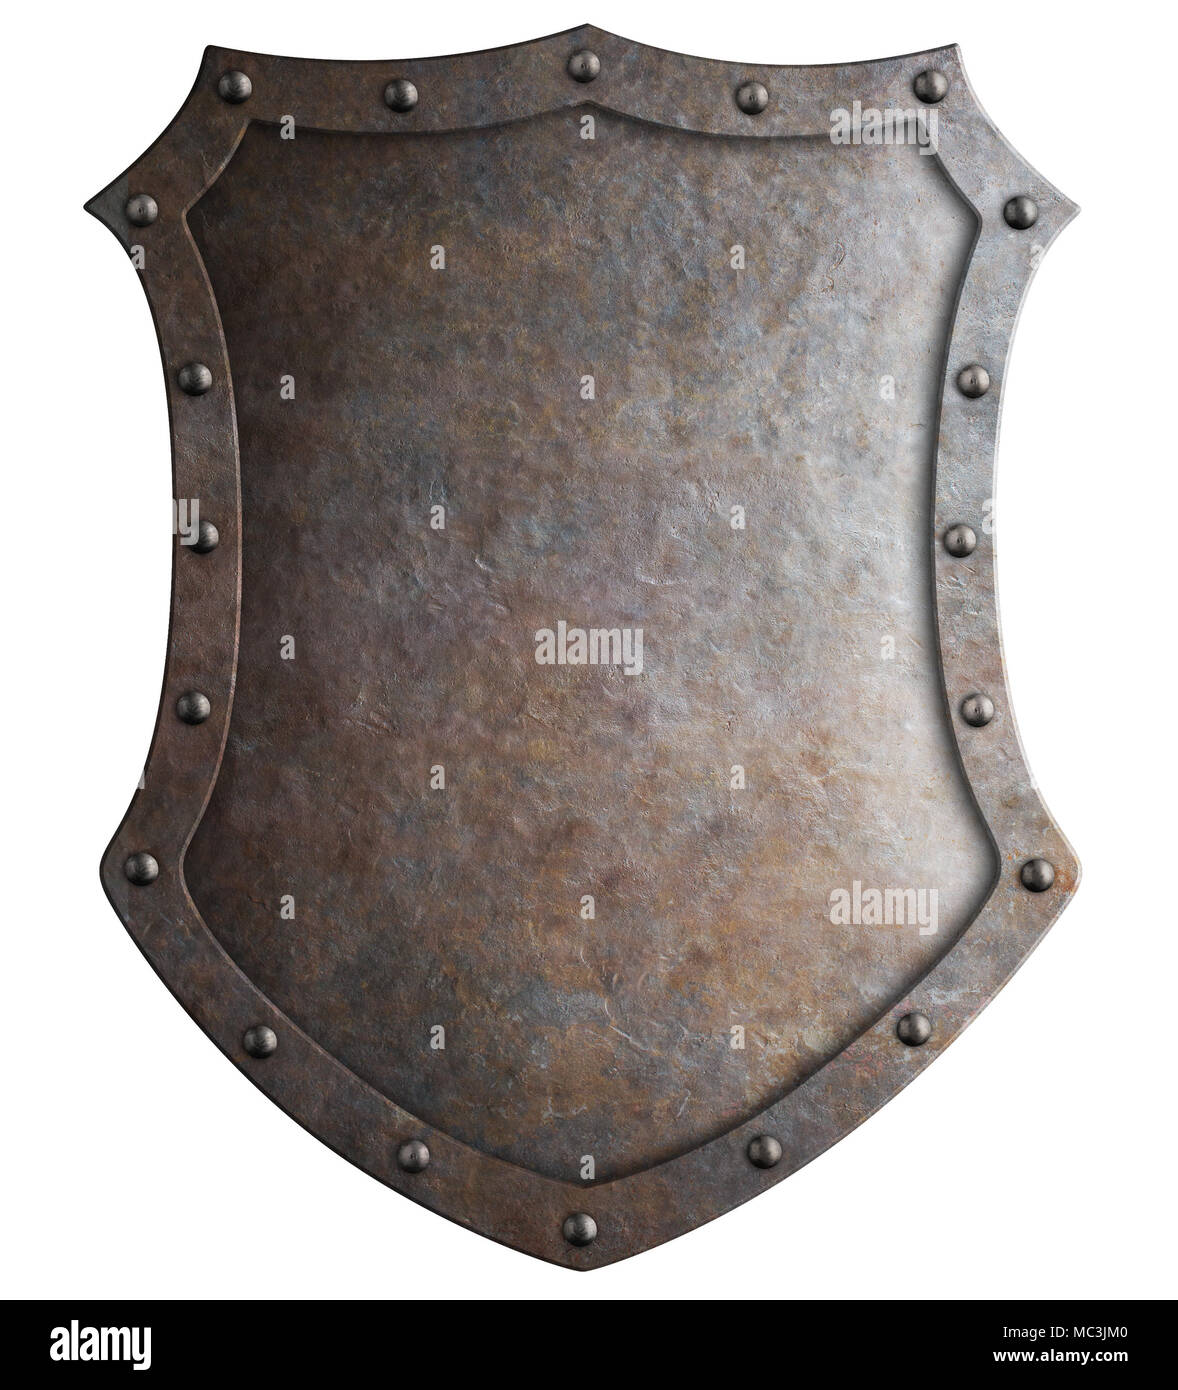 Metal alto medieval escudo o escudo de armas aislados ilustración 3d Foto de stock